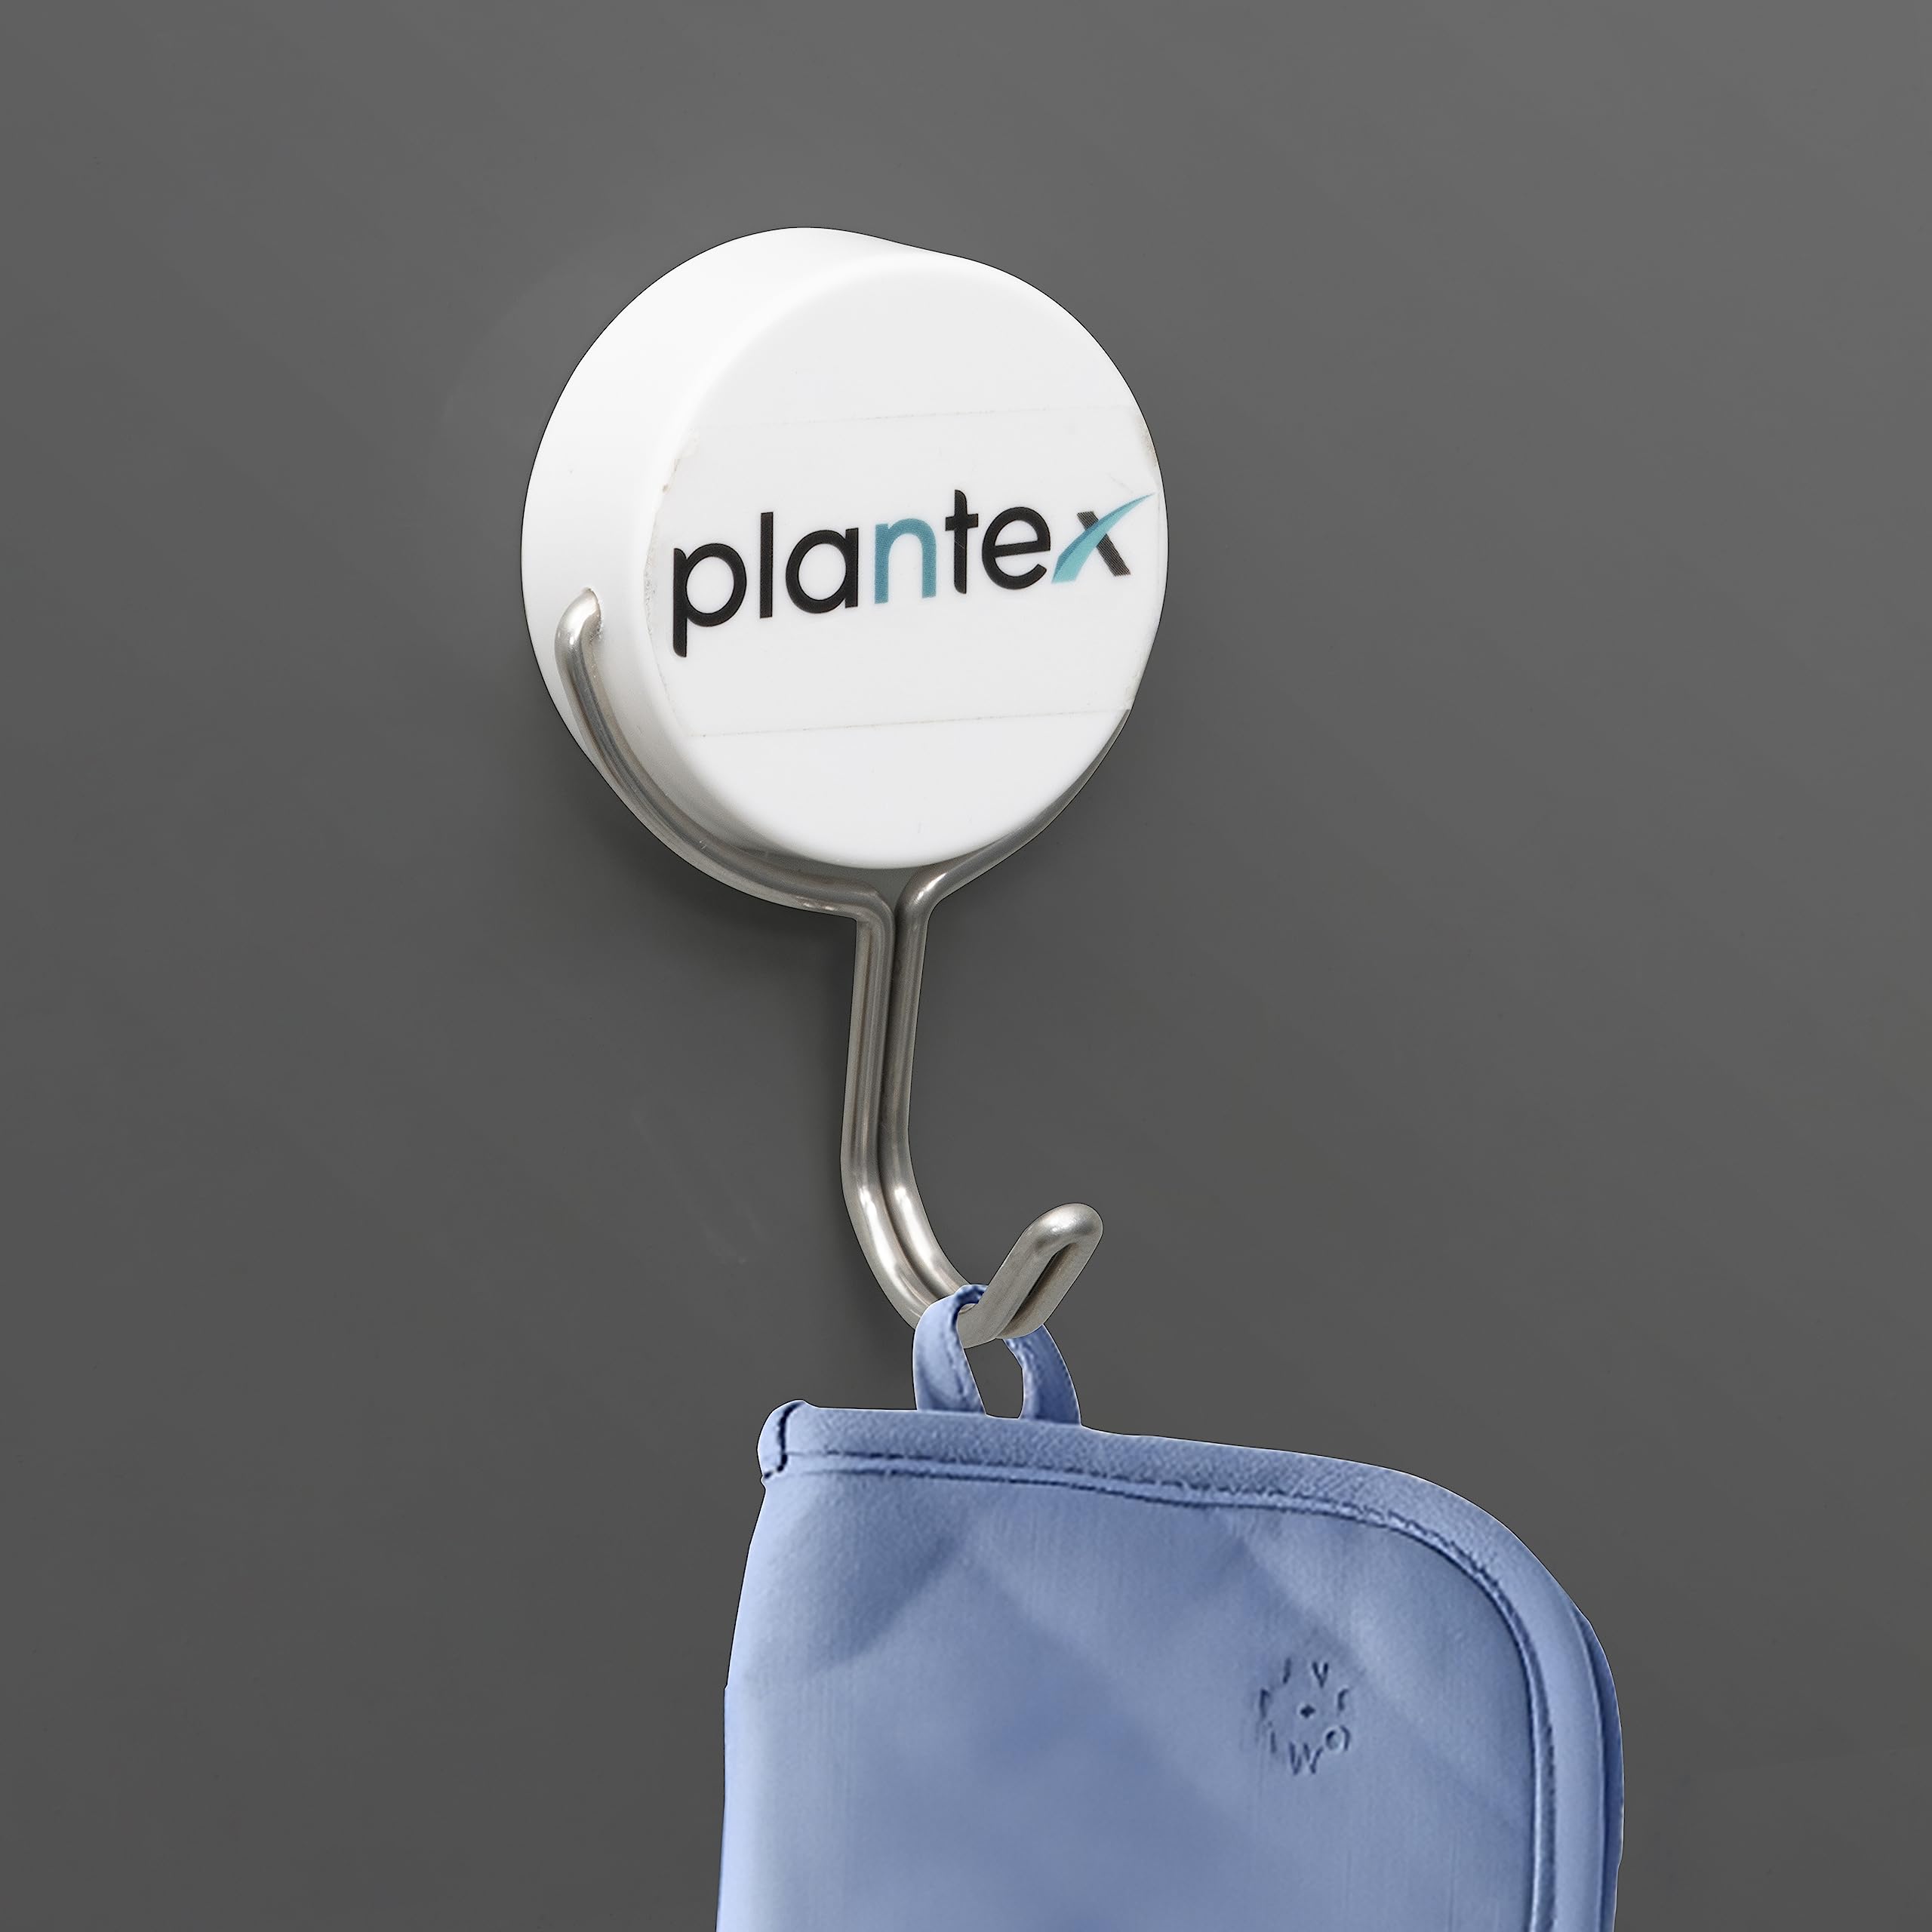 Plantex Stainless Steel Magnetic Rotating Hook for Bathroom/Cloth Hanger/Towel Hanger Hook for Behind Door -Pack of 3 (White)